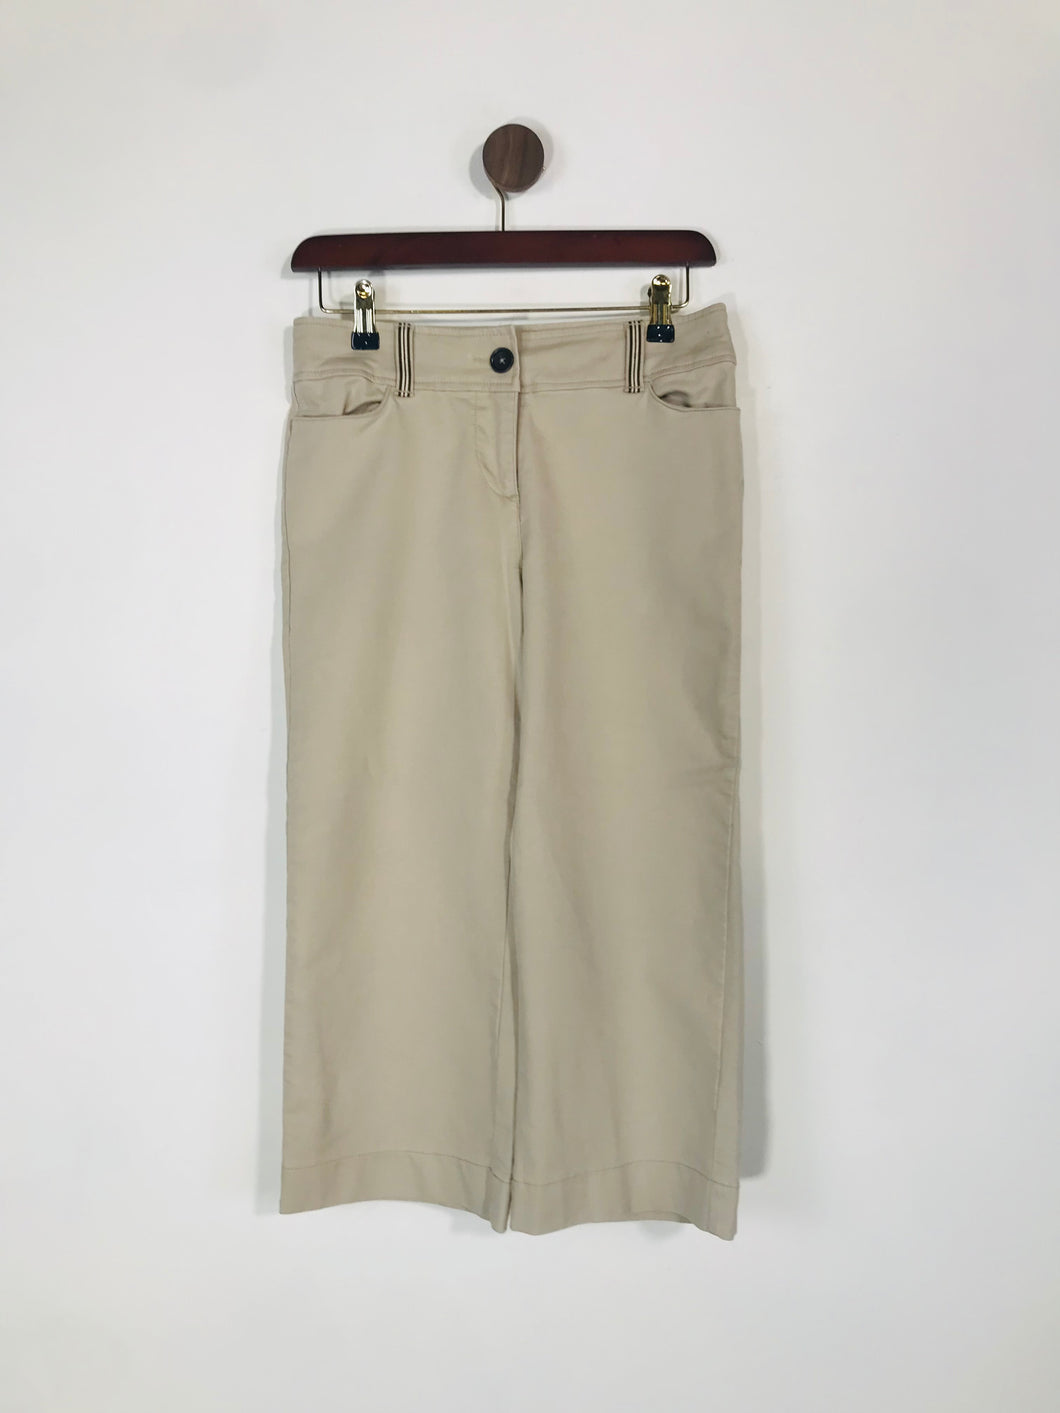 Boden Women's Cotton 3/4 Length Shorts | UK8 | Beige